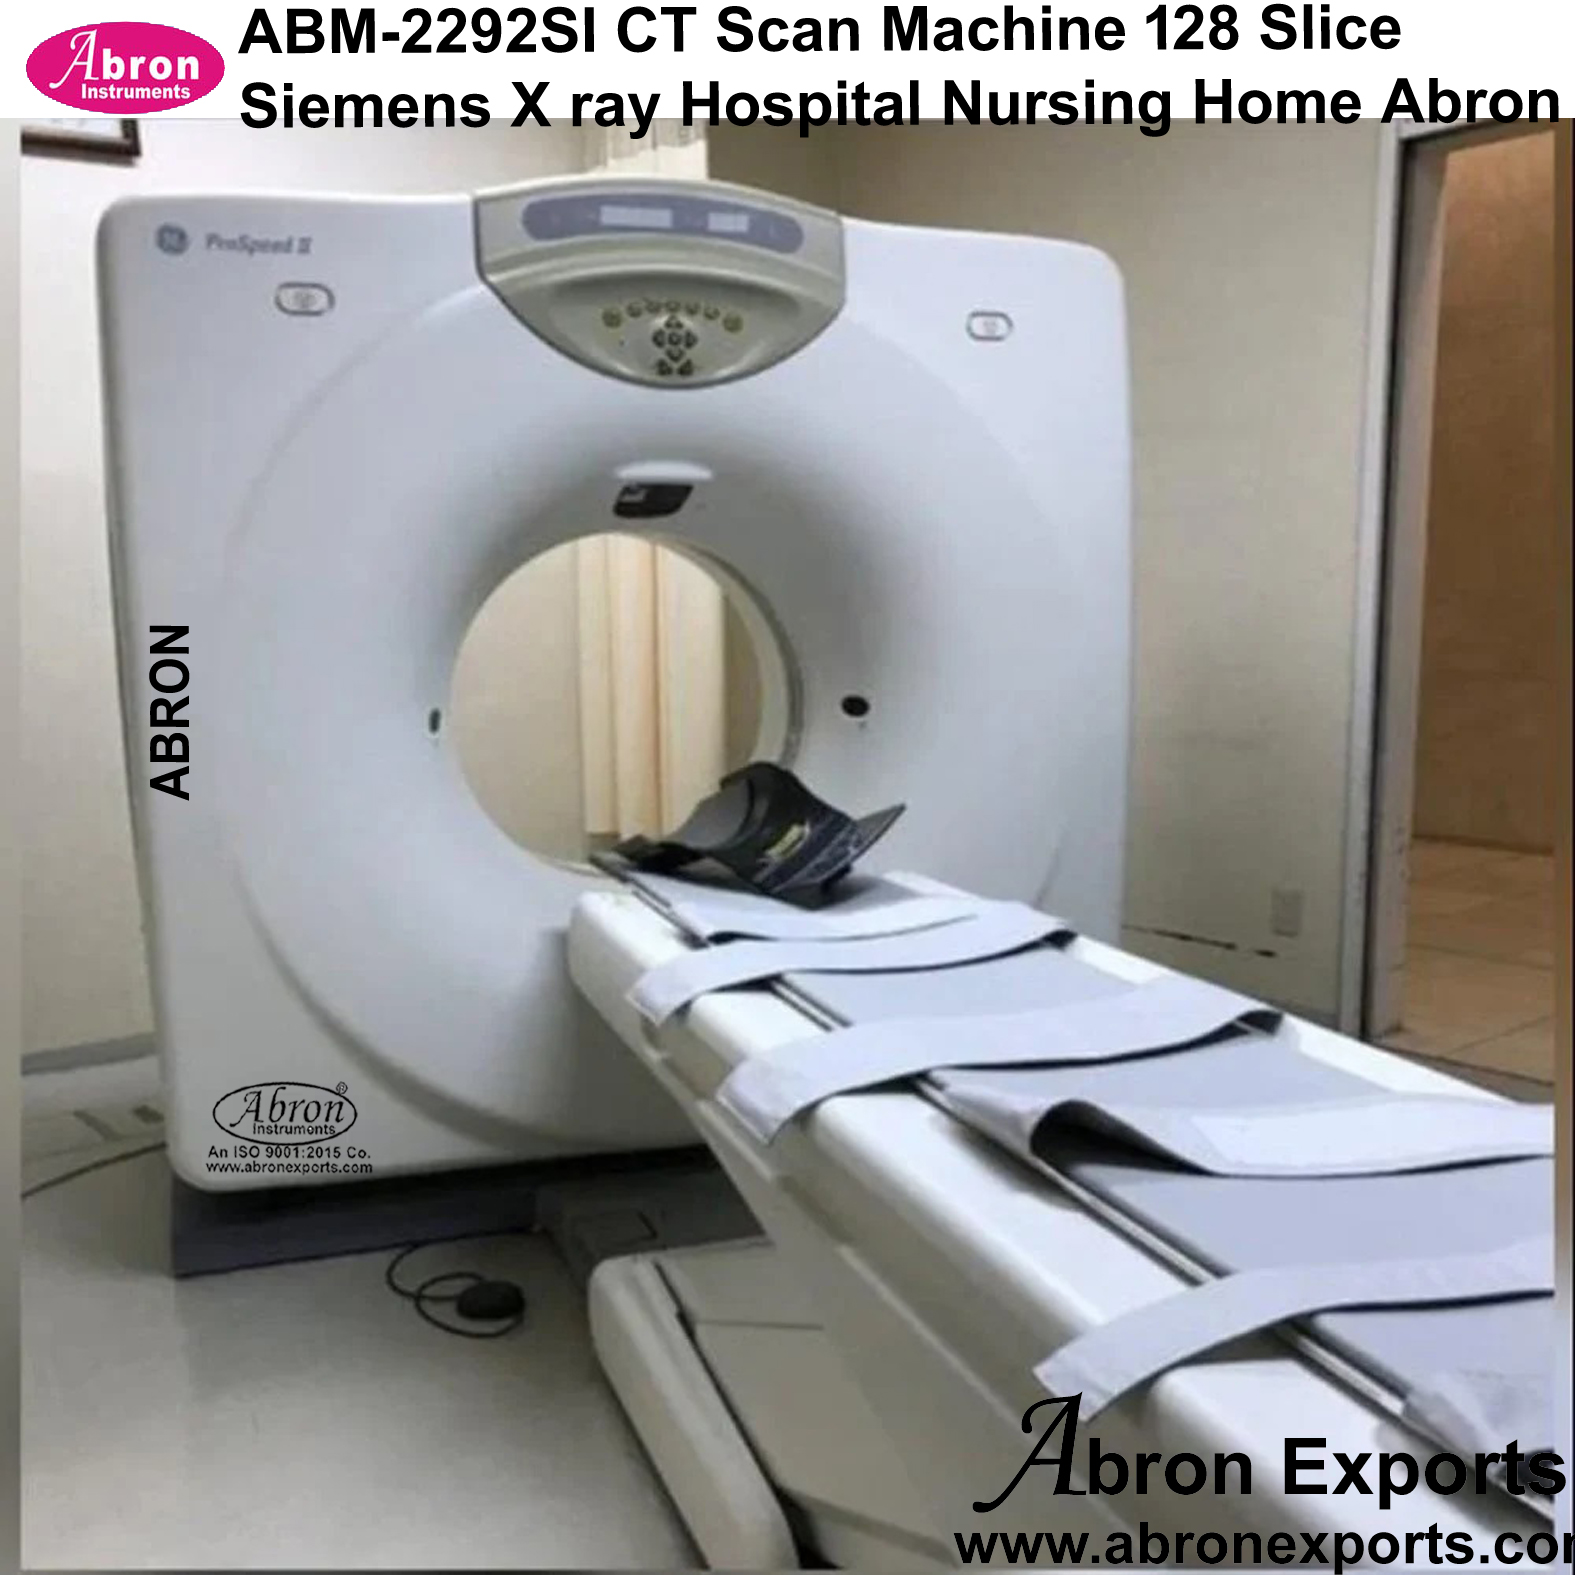 CT Scan Machine 128 Slice Siemens X ray Hospital Nursing Home Abron ABM-2292SI 